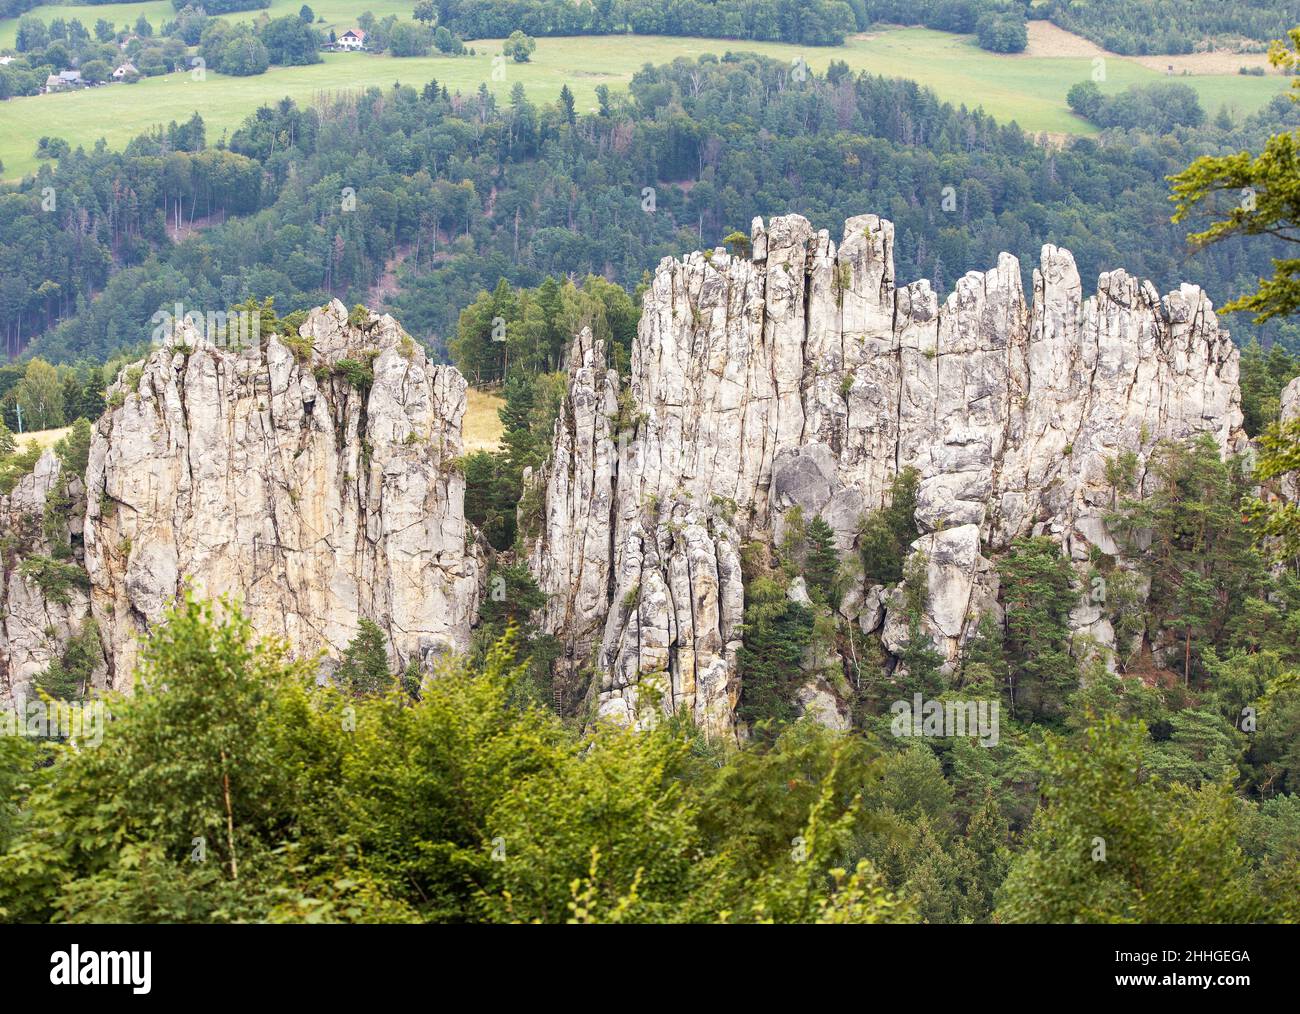 Suche skaly, dry rocks, sandstone rock city, Cesky raj, czech or Bohemian paradise, Czech Republic Stock Photo